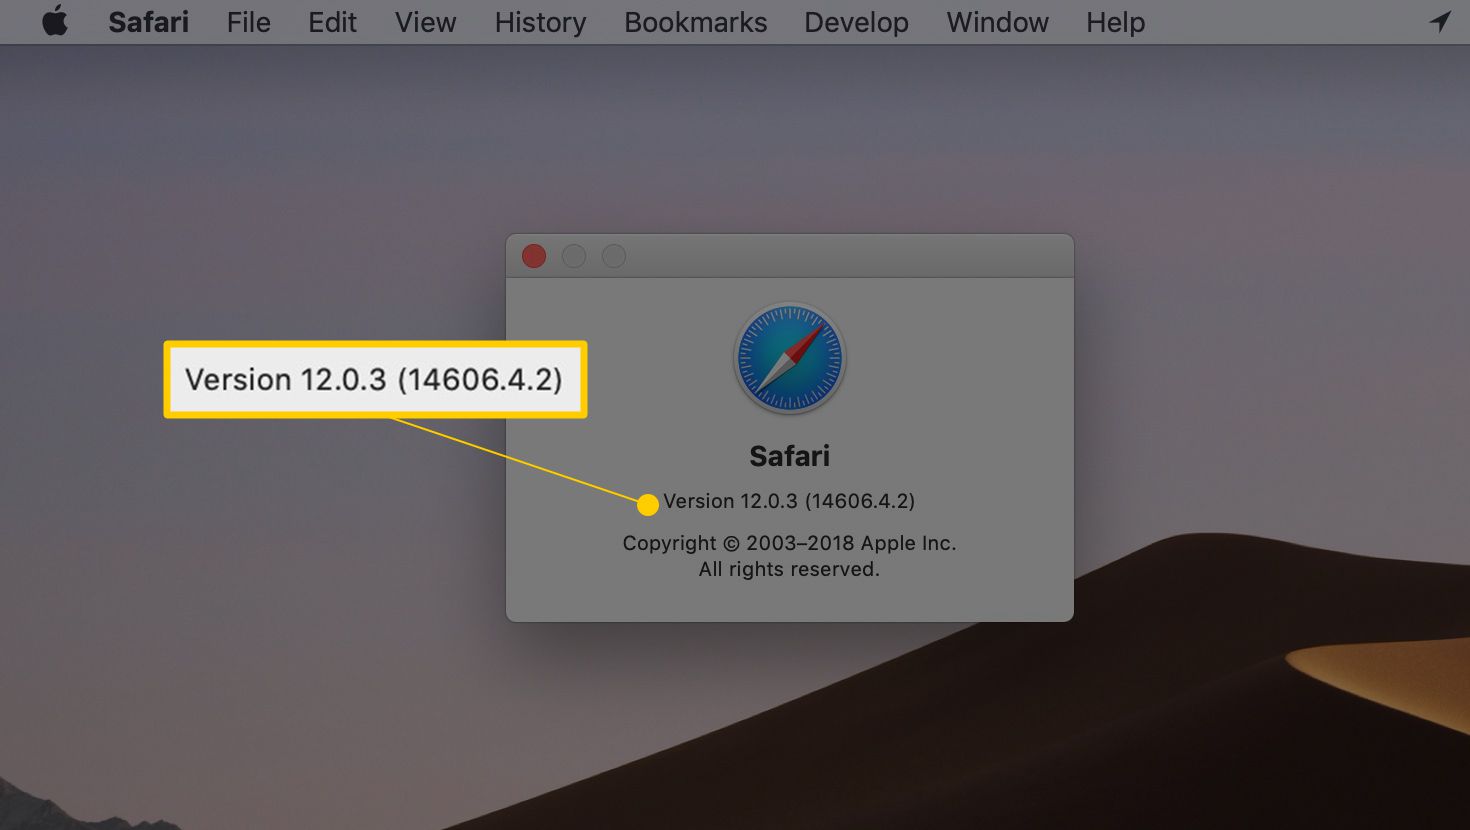 Safari-versie 12.0.3-venster in macOS